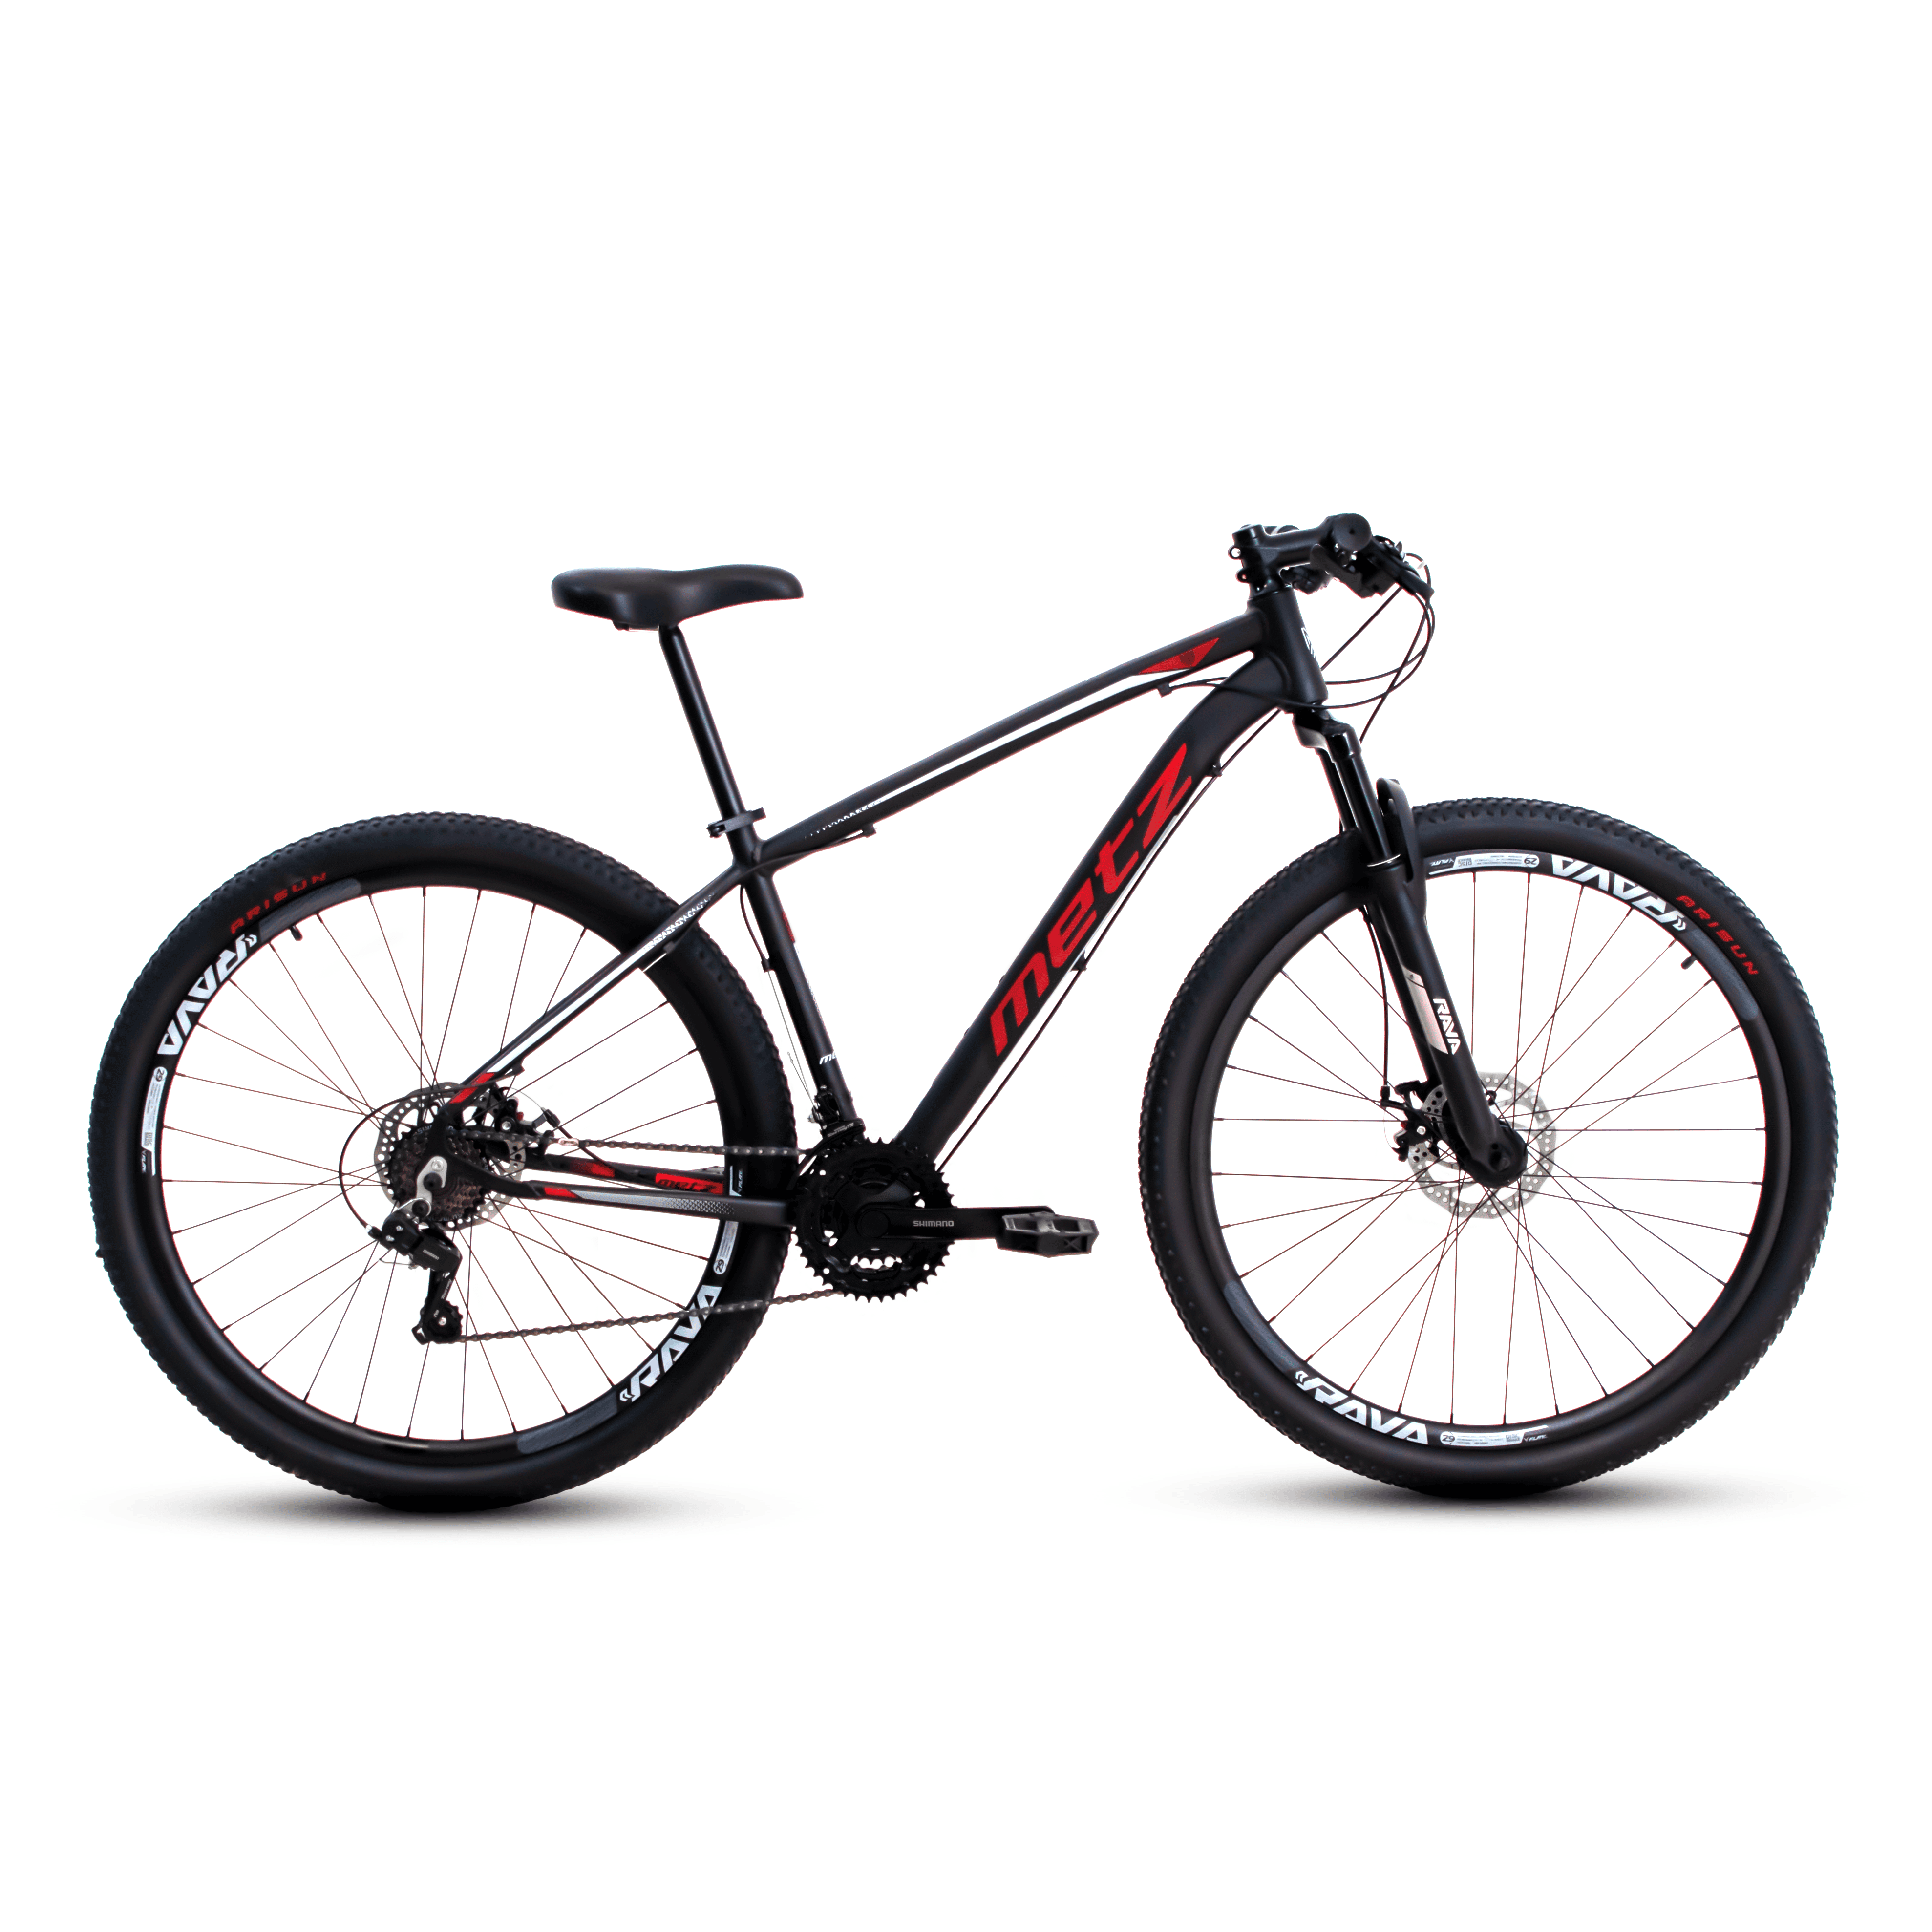 Bicicleta Metz Fuse Plus | 21V - Preto/Vermelho, 15.5"